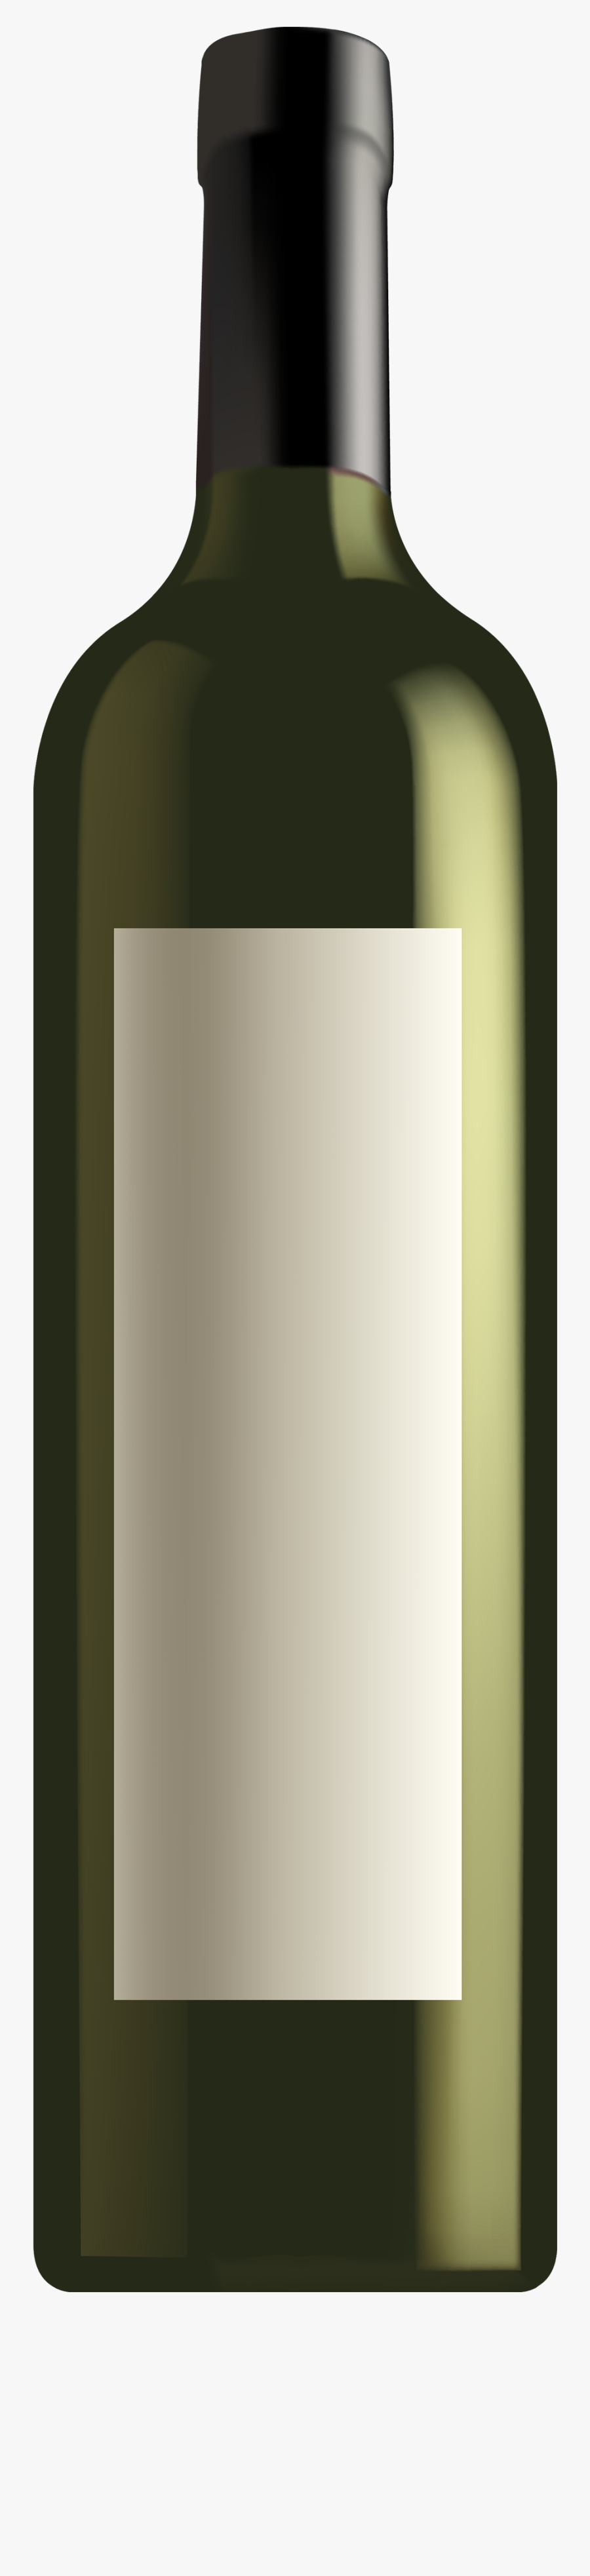 Green Wine Bottle Png, Transparent Clipart